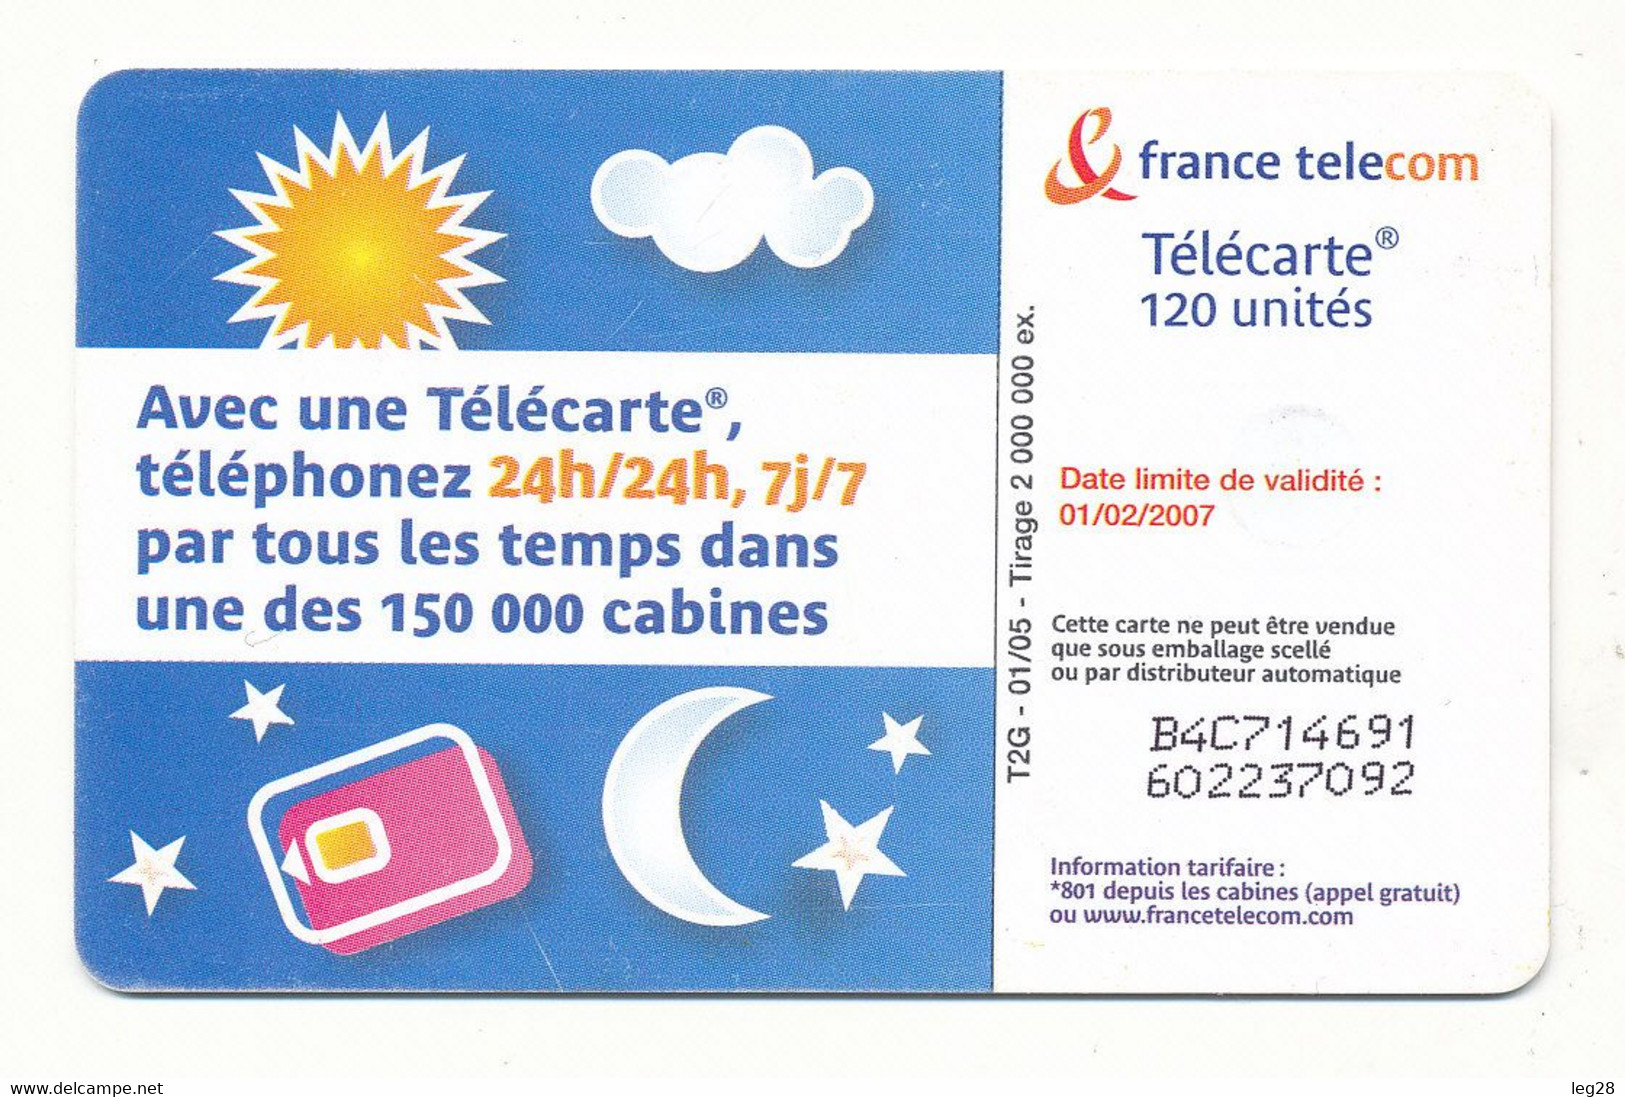 FRANCE TELECOM CABINE - 2005